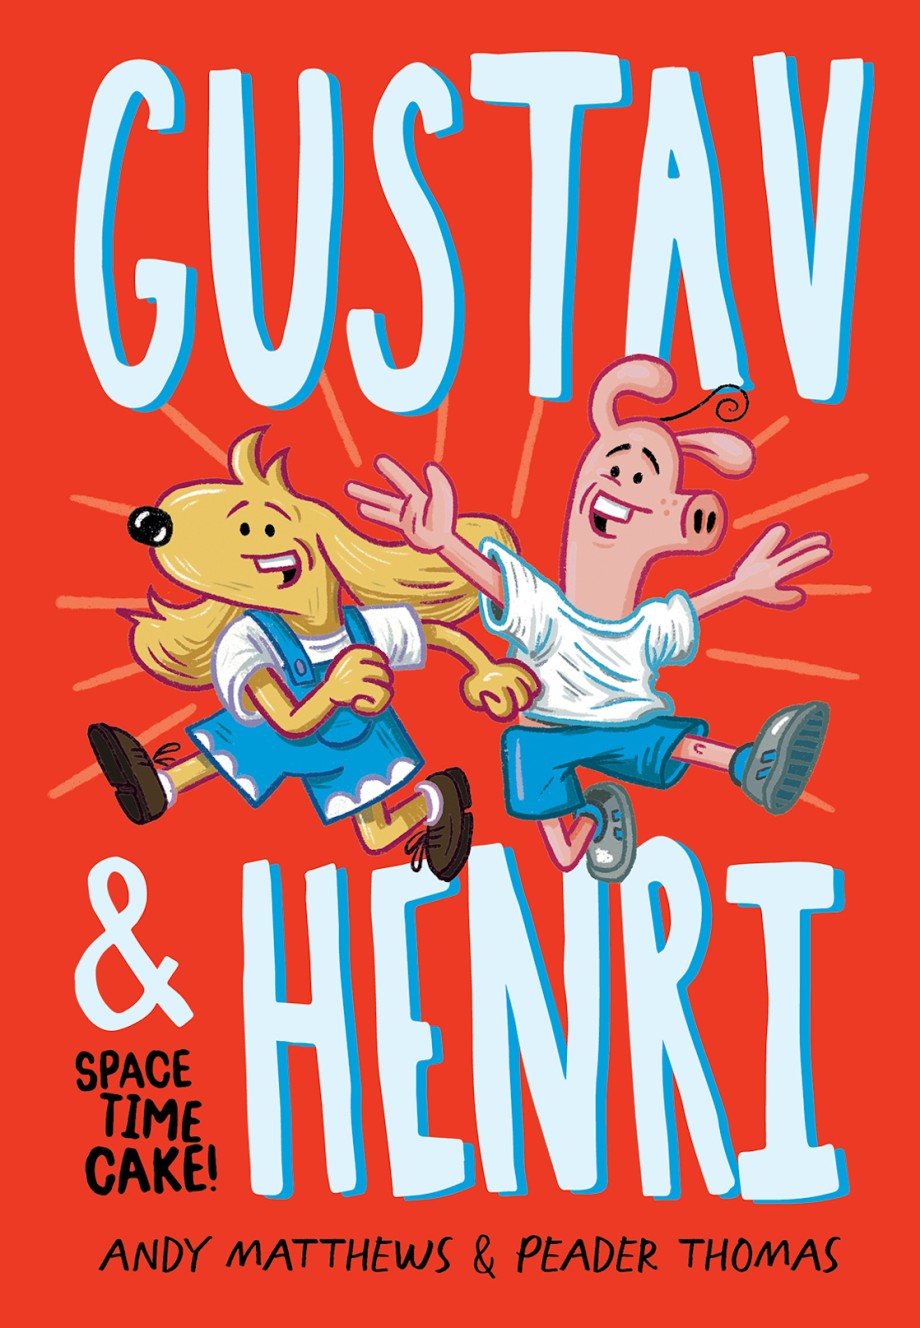 Gustav & Henri: Space Time Cake 